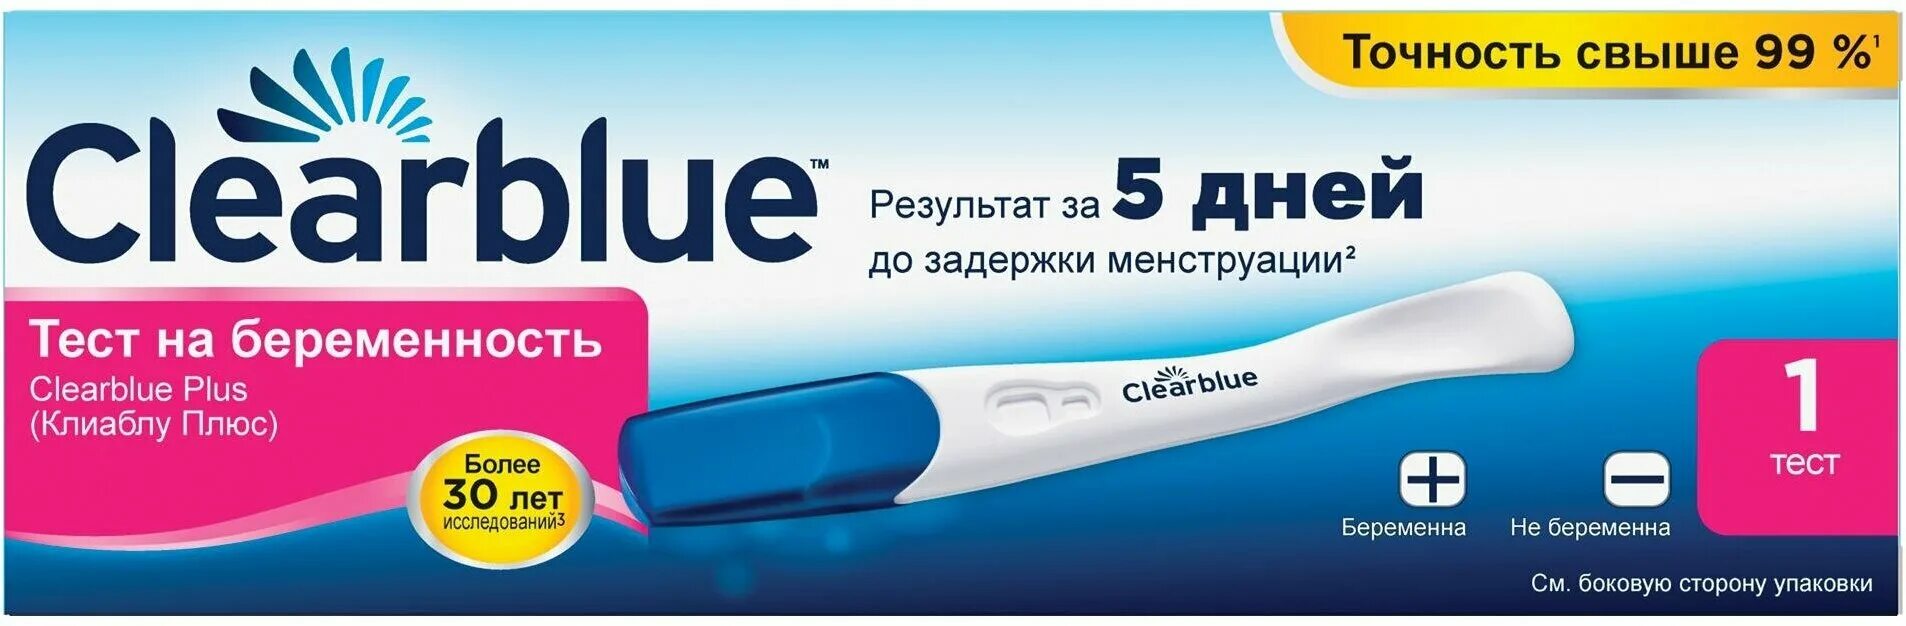 Тесты clearblue форум. Тест на беременность Clearblue. Клиаблу тест на беременность. Тест Clearblue Plus на беременность. Результаты теста на беременность Clearblue.